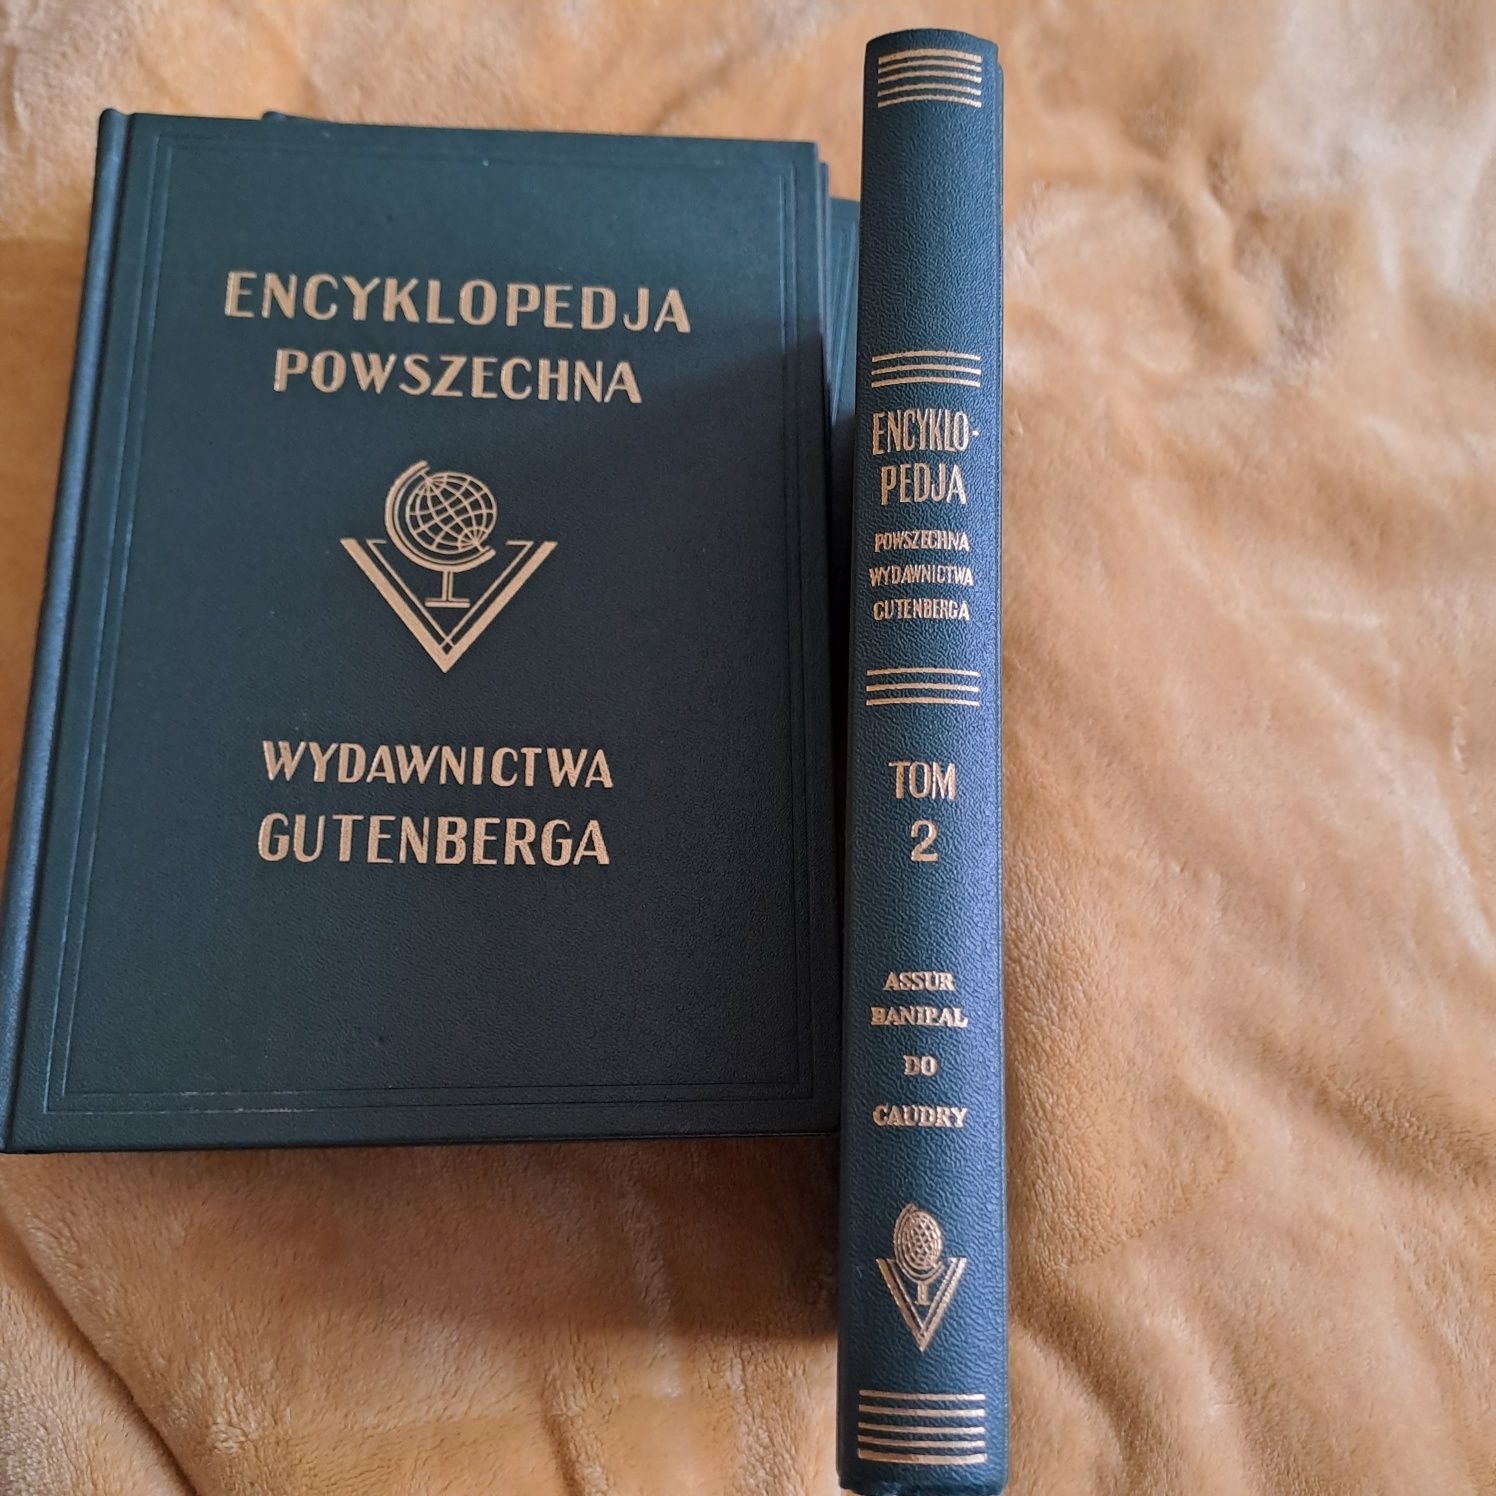 Encyklopedia powszechna wydawnictwa Gutenberga Tom 2